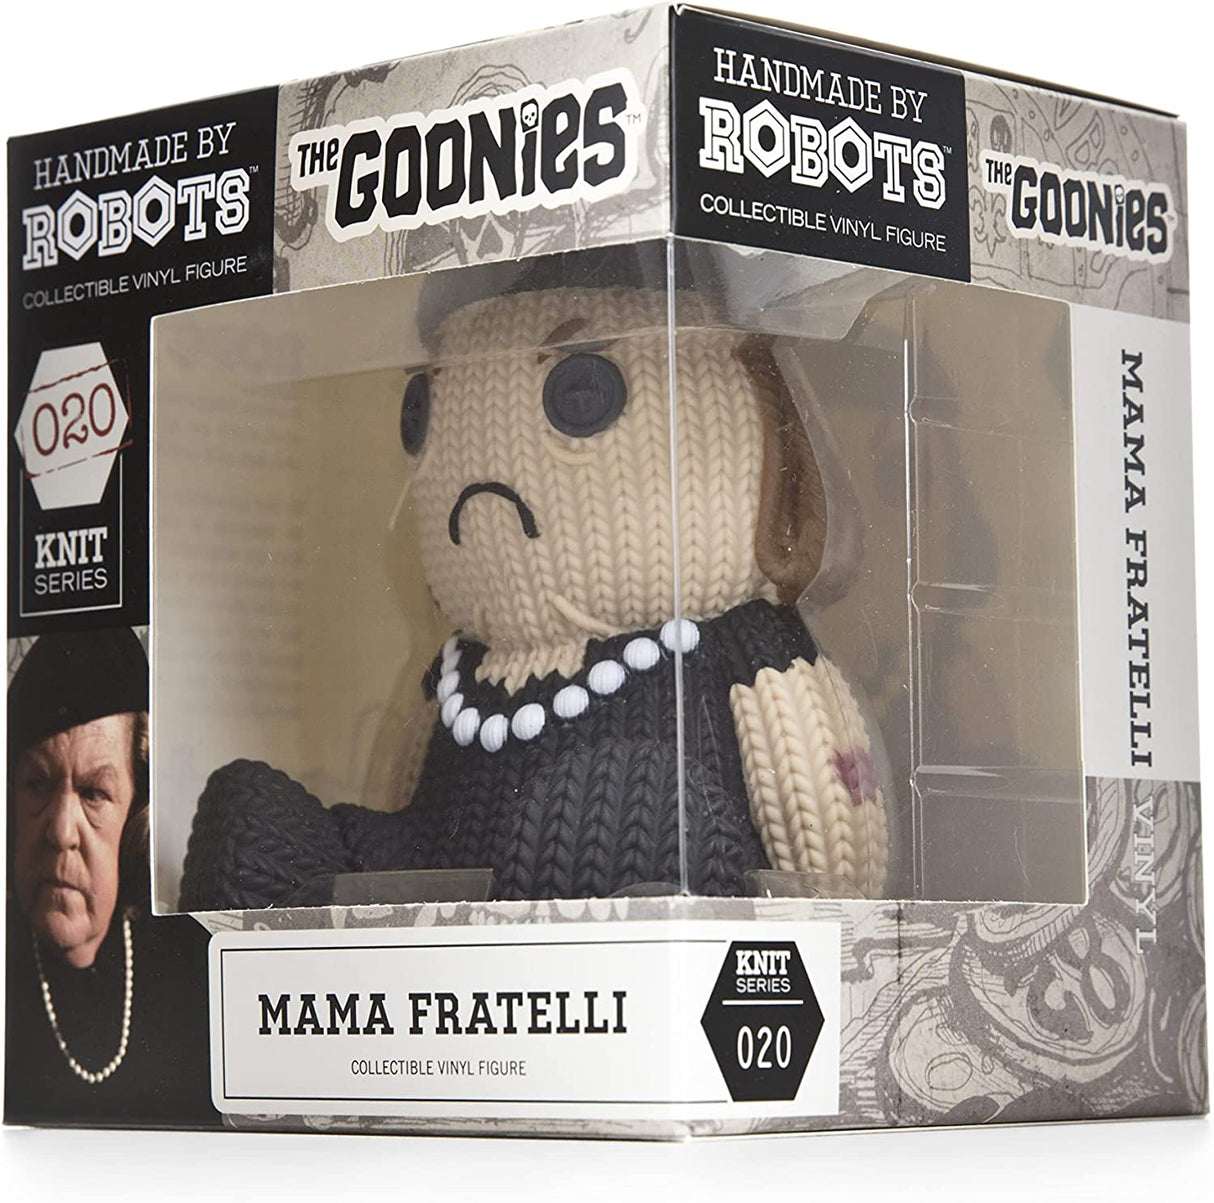 Handmade by Robots | Goonies | Mama Fratelli Vinyl Figure | Knit Series #020